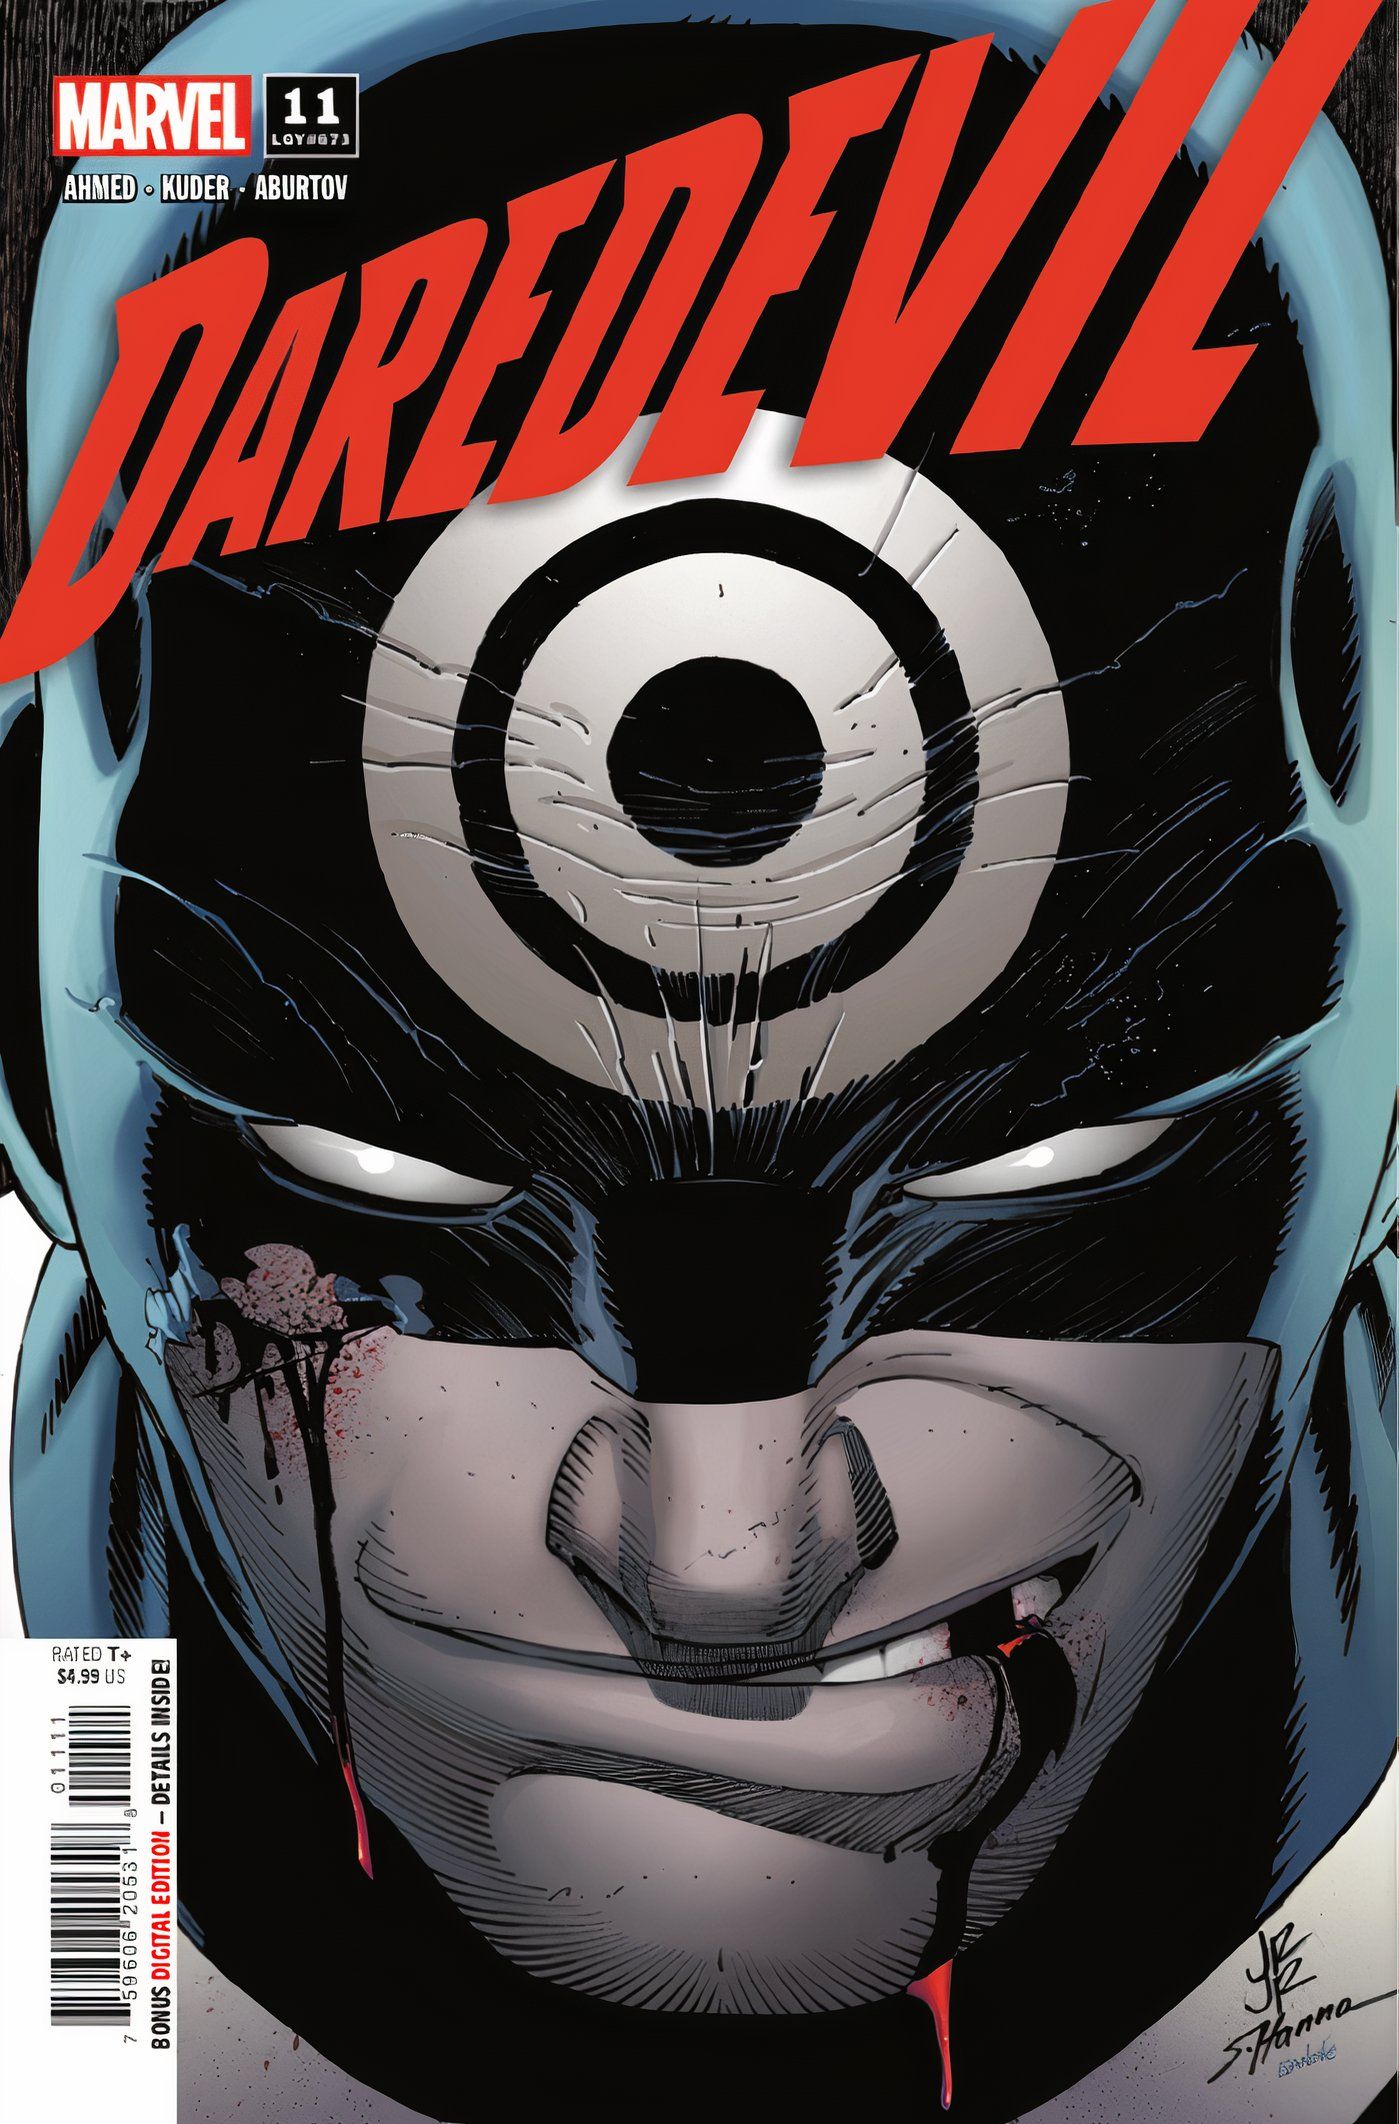 Capa do Demolidor 11 Bullseye Sorrindo Marvel